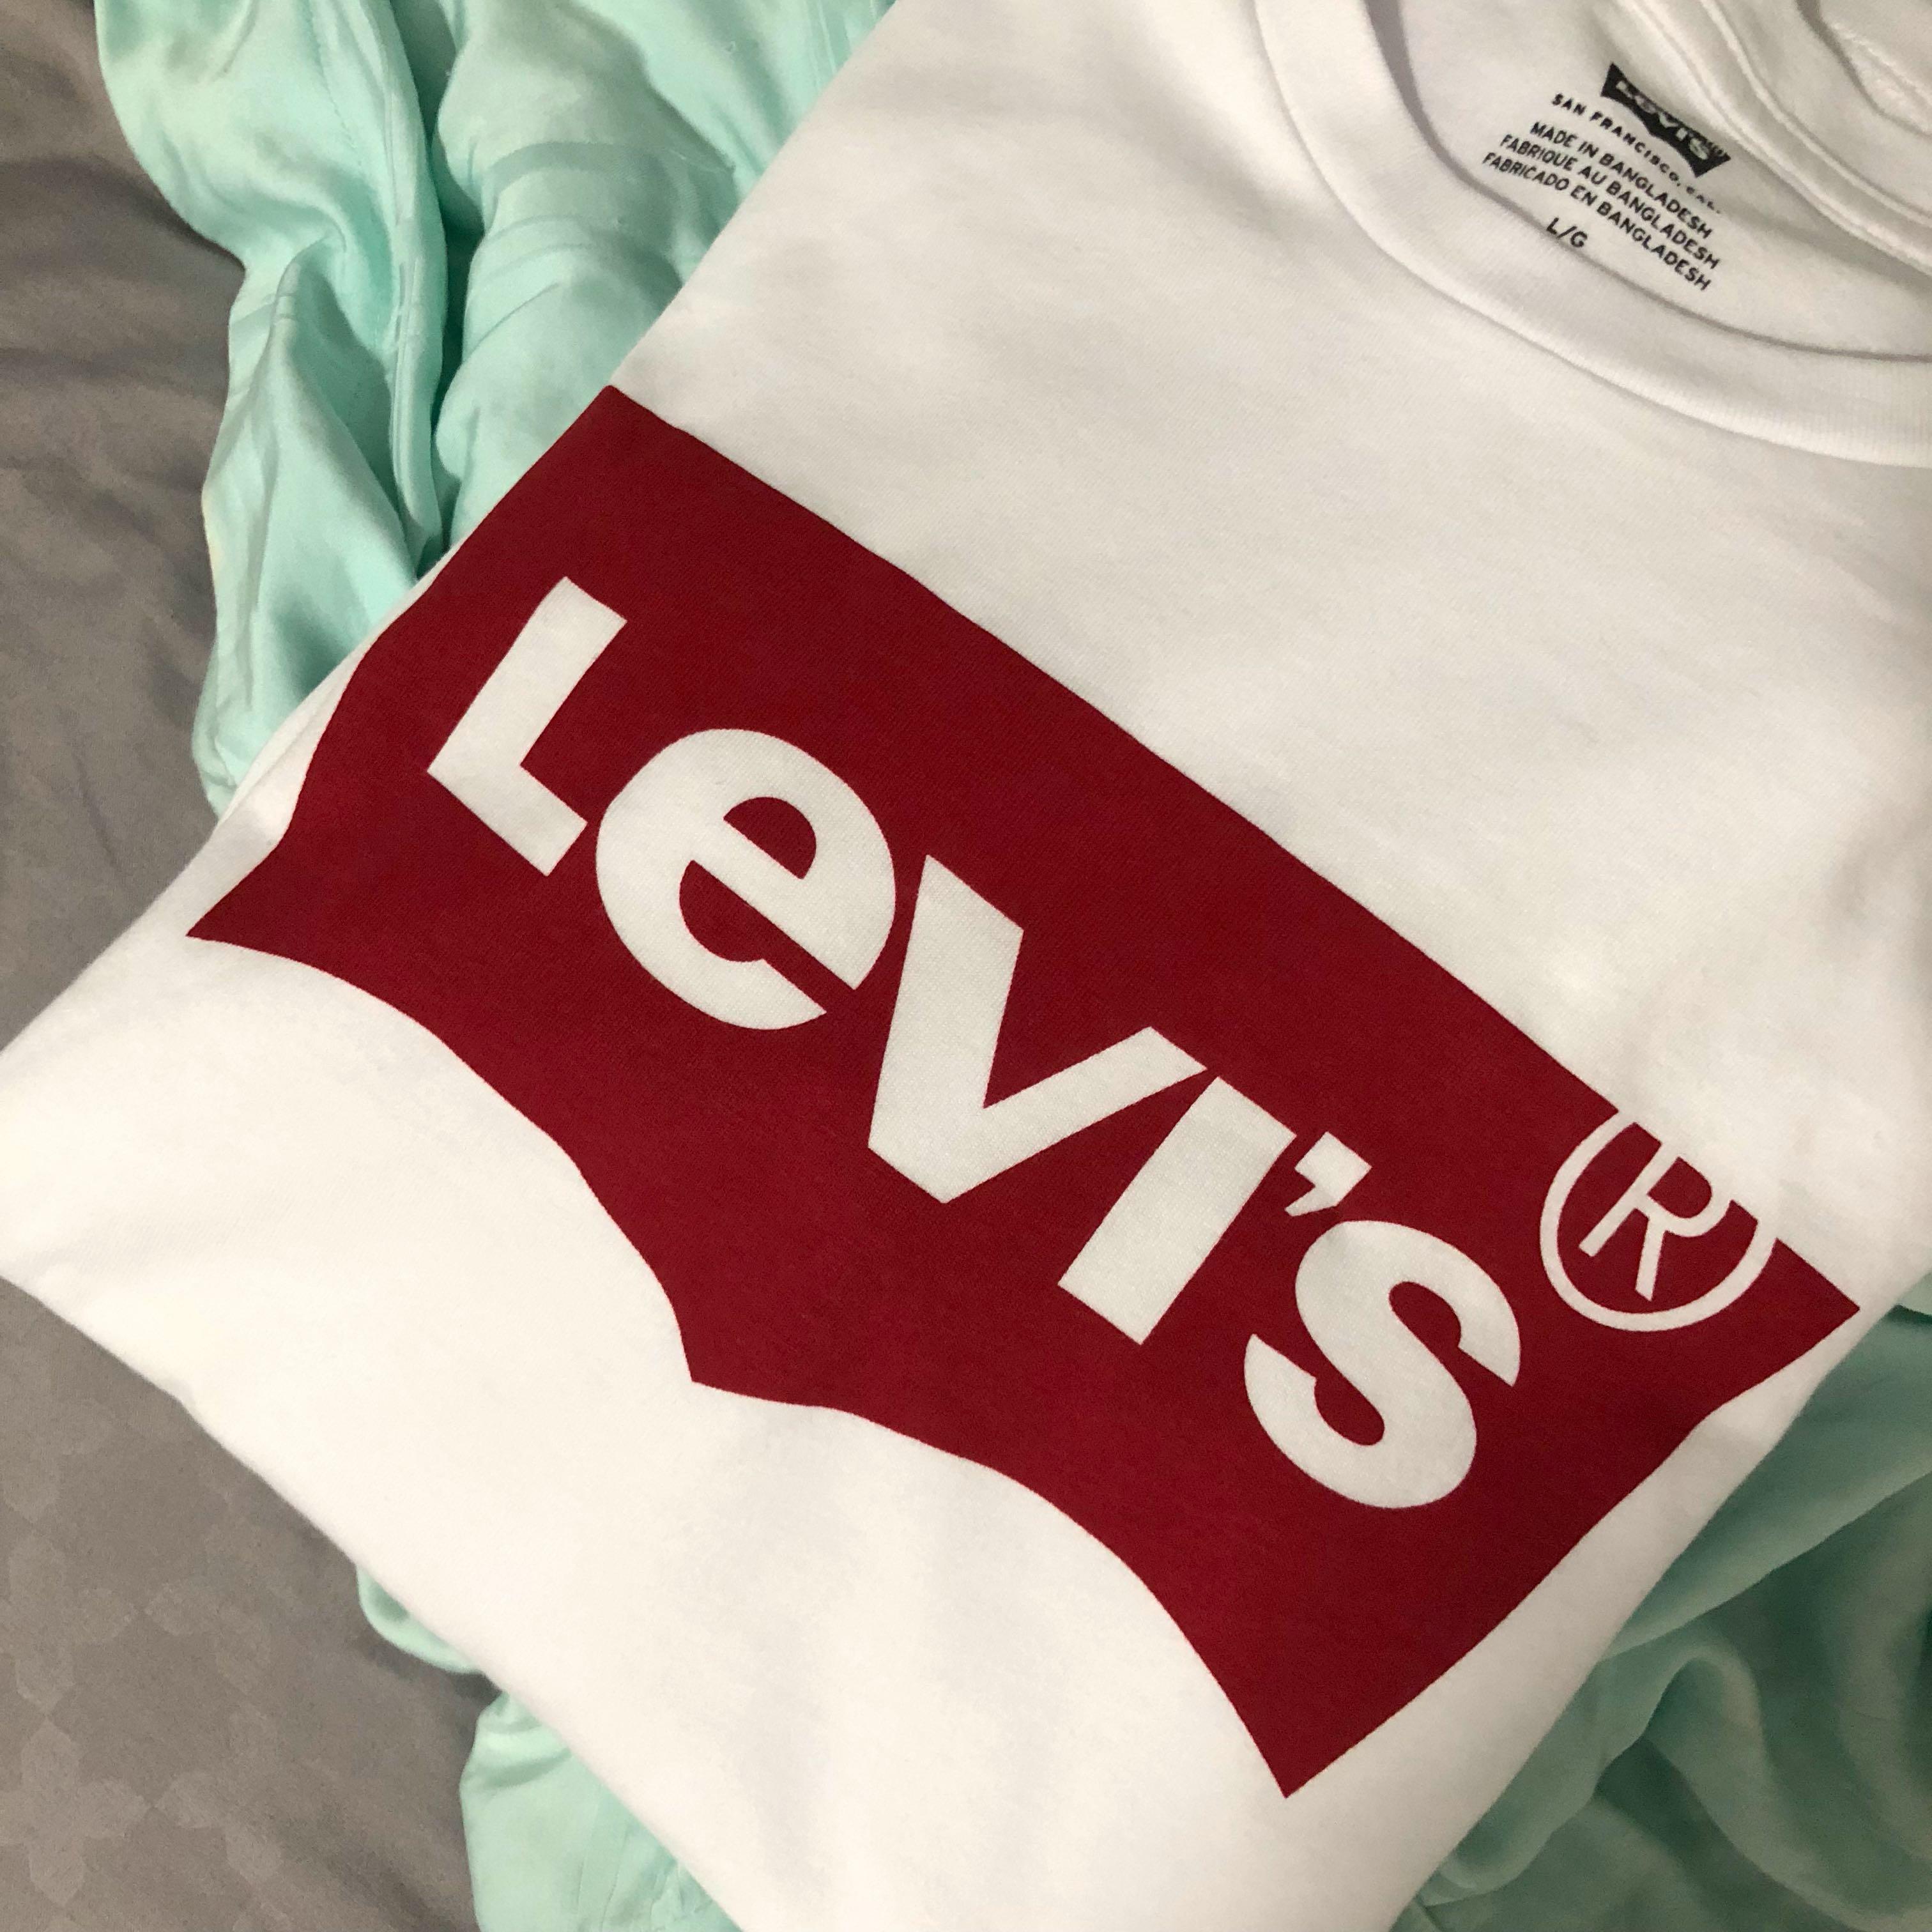 new levis t shirt